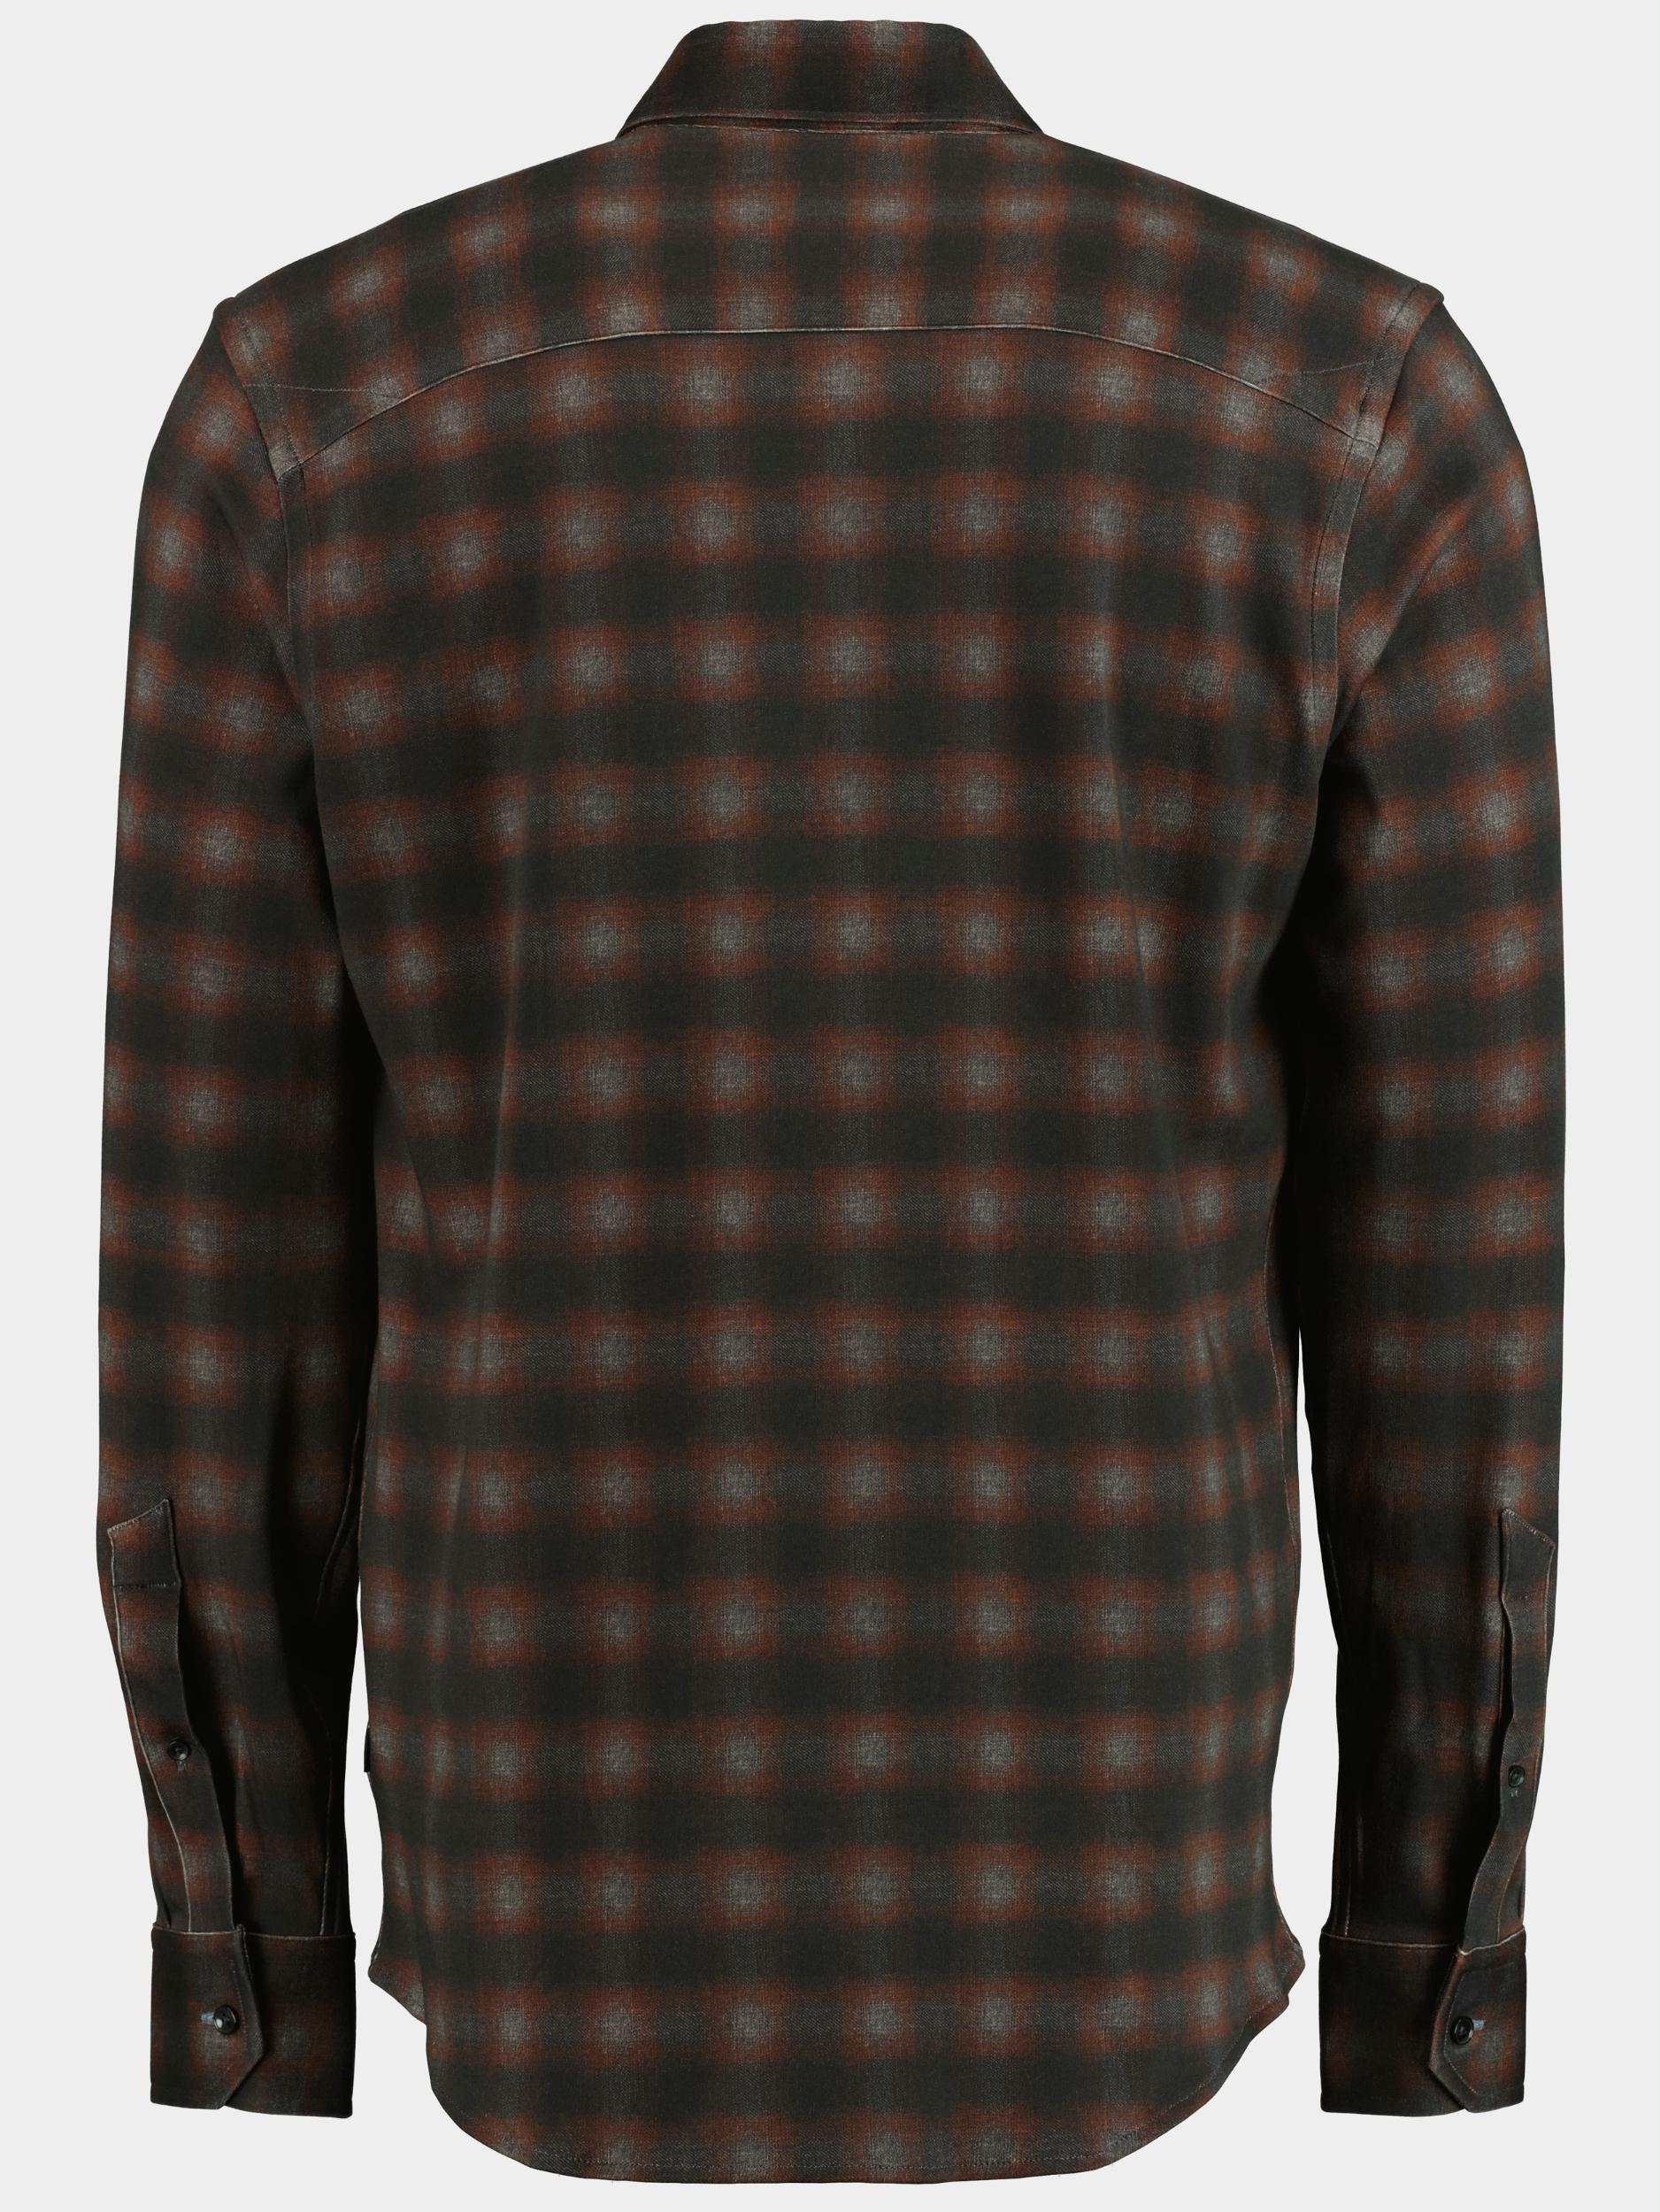 Vanguard Casual hemd lange mouw Grijs Long Sleeve Shirt Check print VSI2209274/960